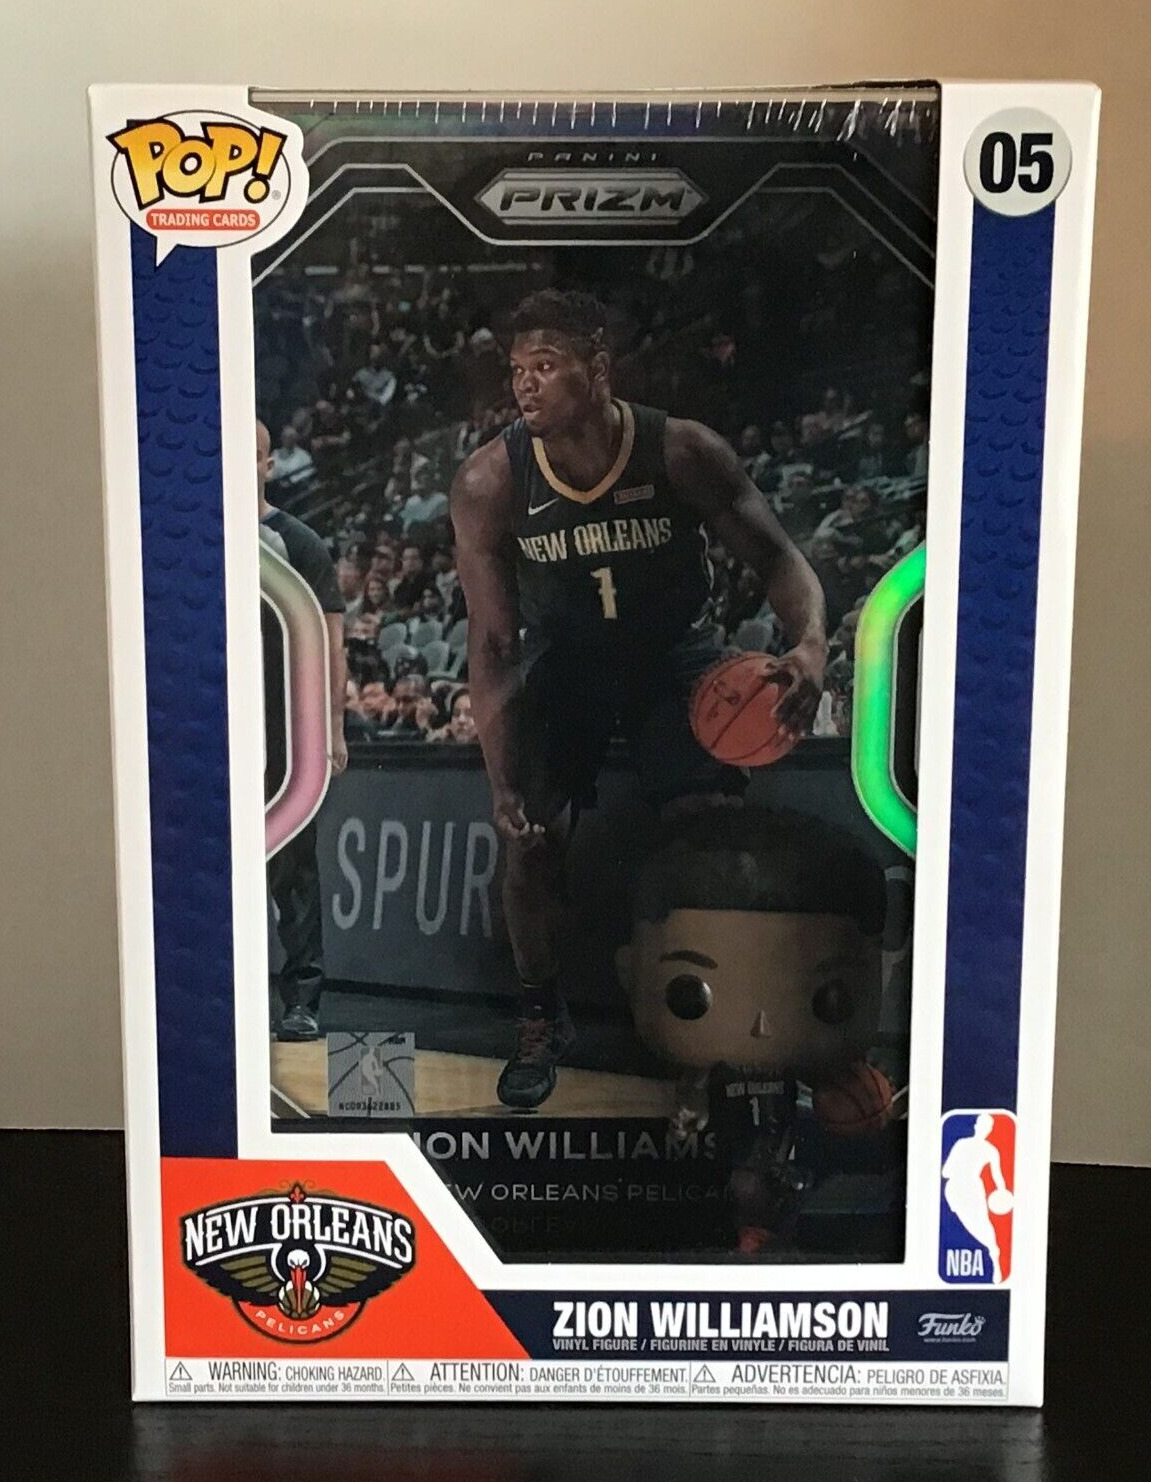 Funko Pop NBA Zion Williamson Pop Prizm Trading Card Figure with Case #05